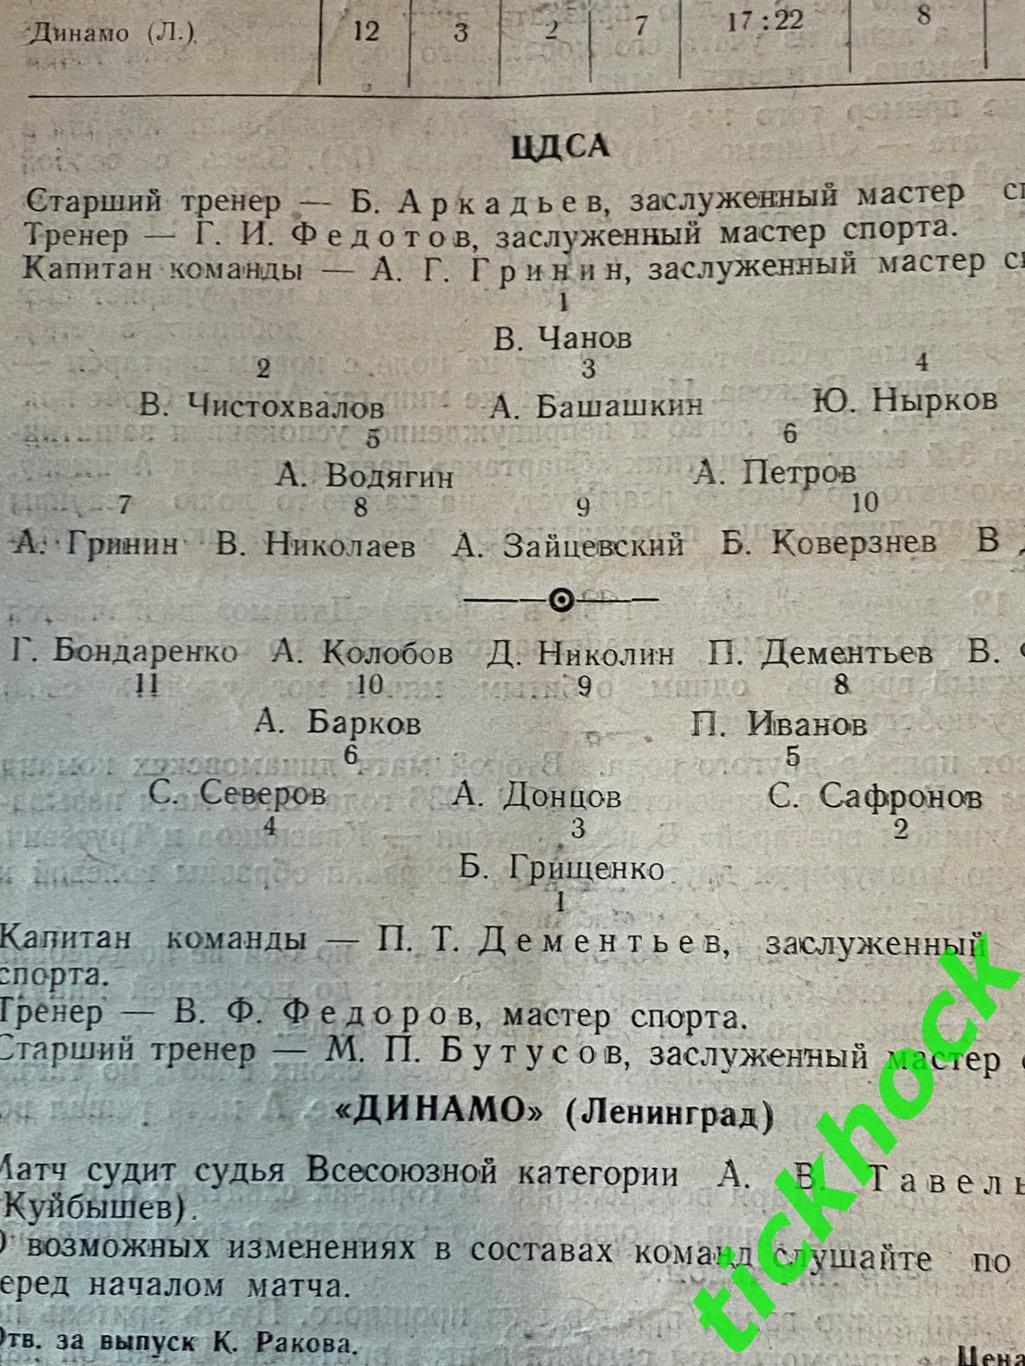 ЦДСА / ЦСКА Москва - Динамо Ленинград 20.06. 1951 Первенство СССР- SY 1